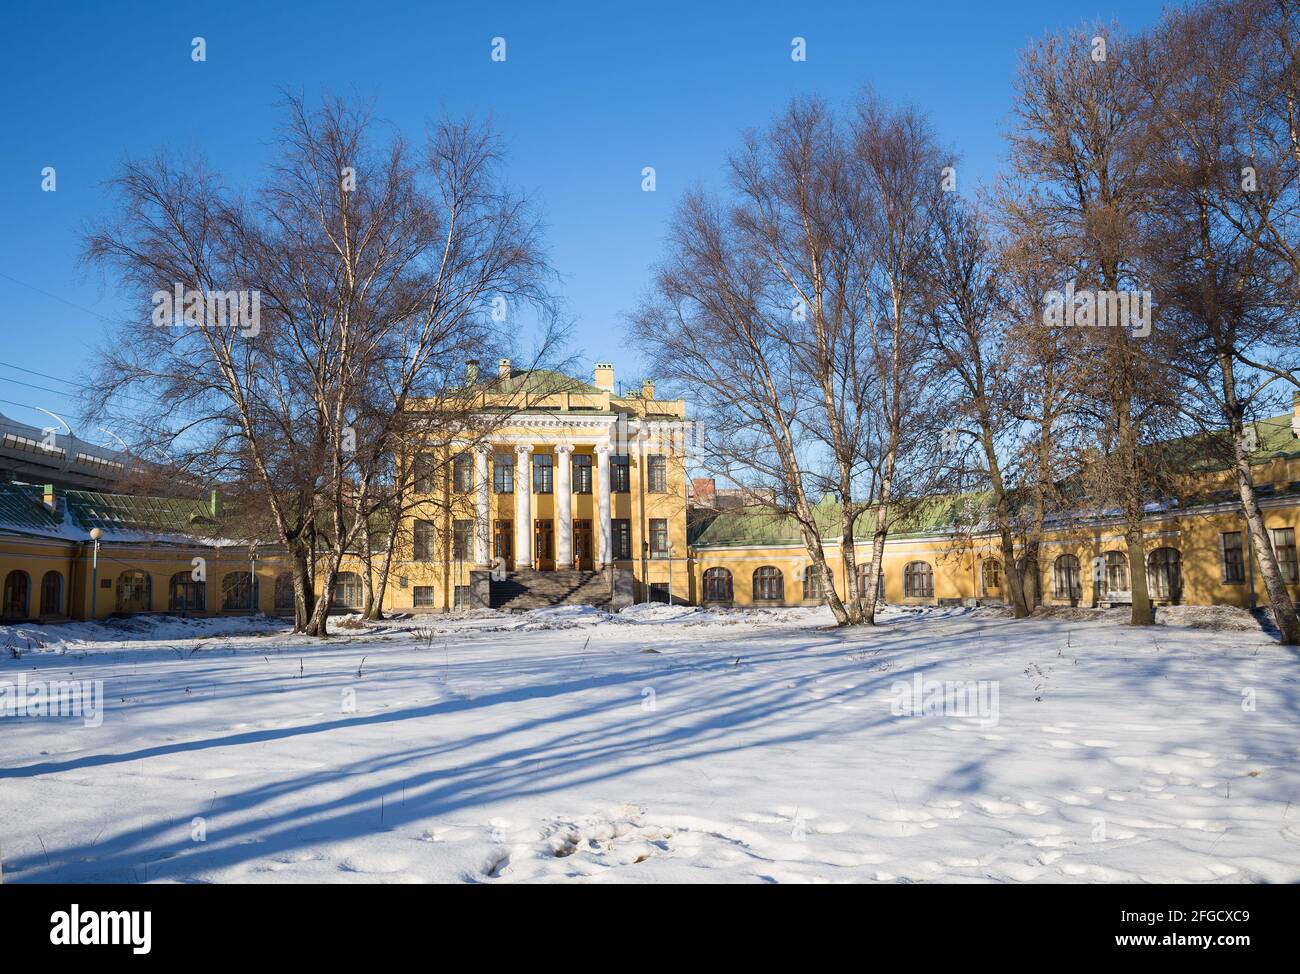 Kiryanovo estate, dacha of Princess Vorontsova-Dashkova, has shape of horseshoe, built in 1783. St. Petersburg, Russia Stock Photo